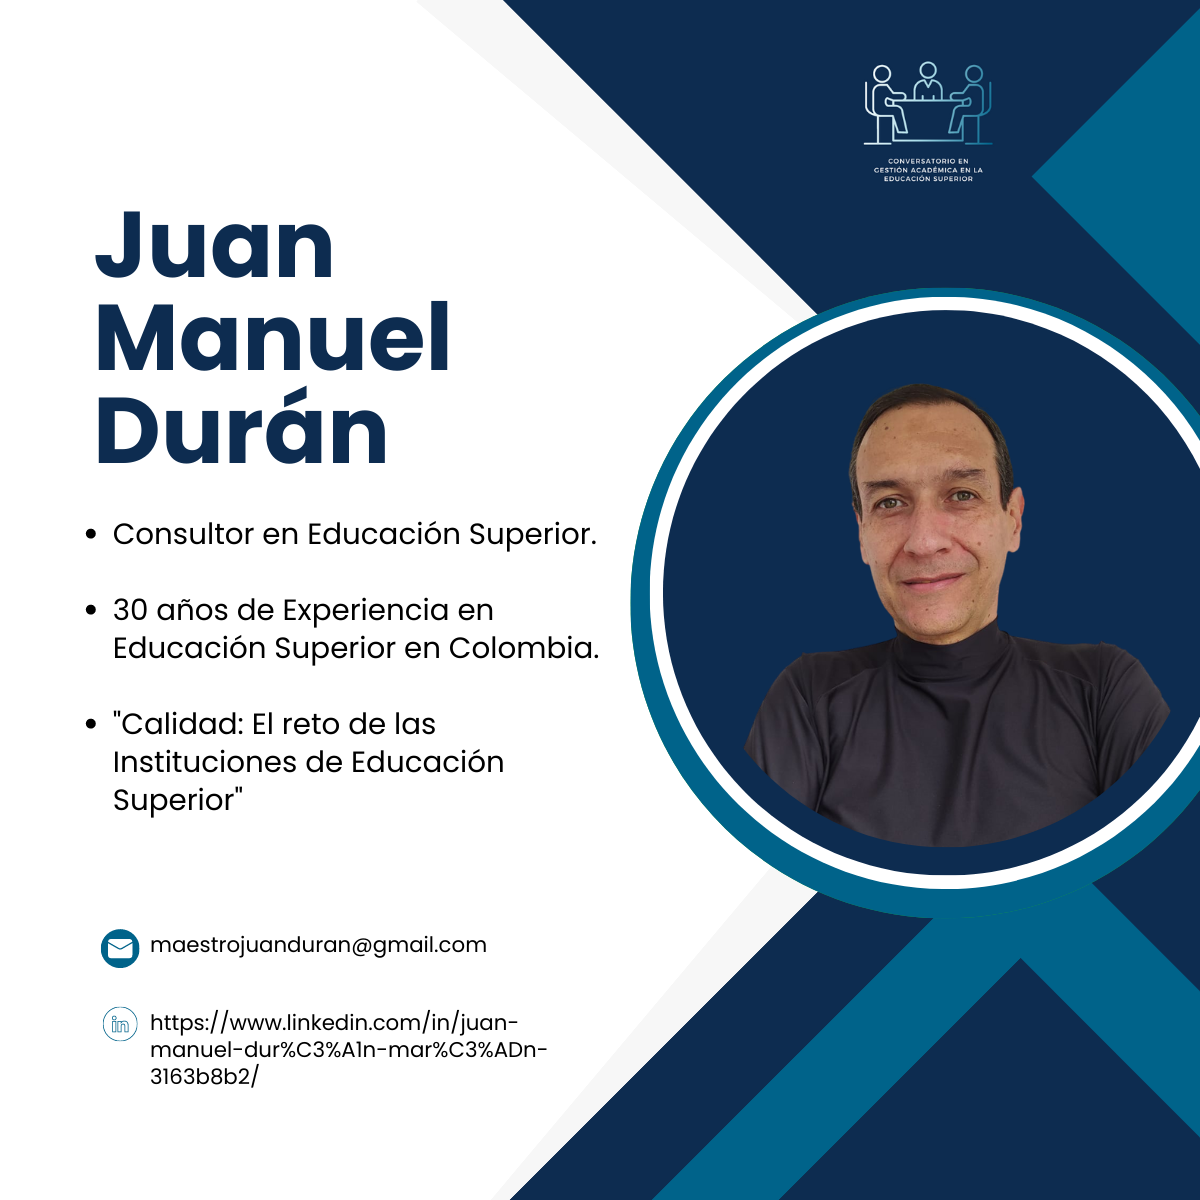 Juan Manuel Durán